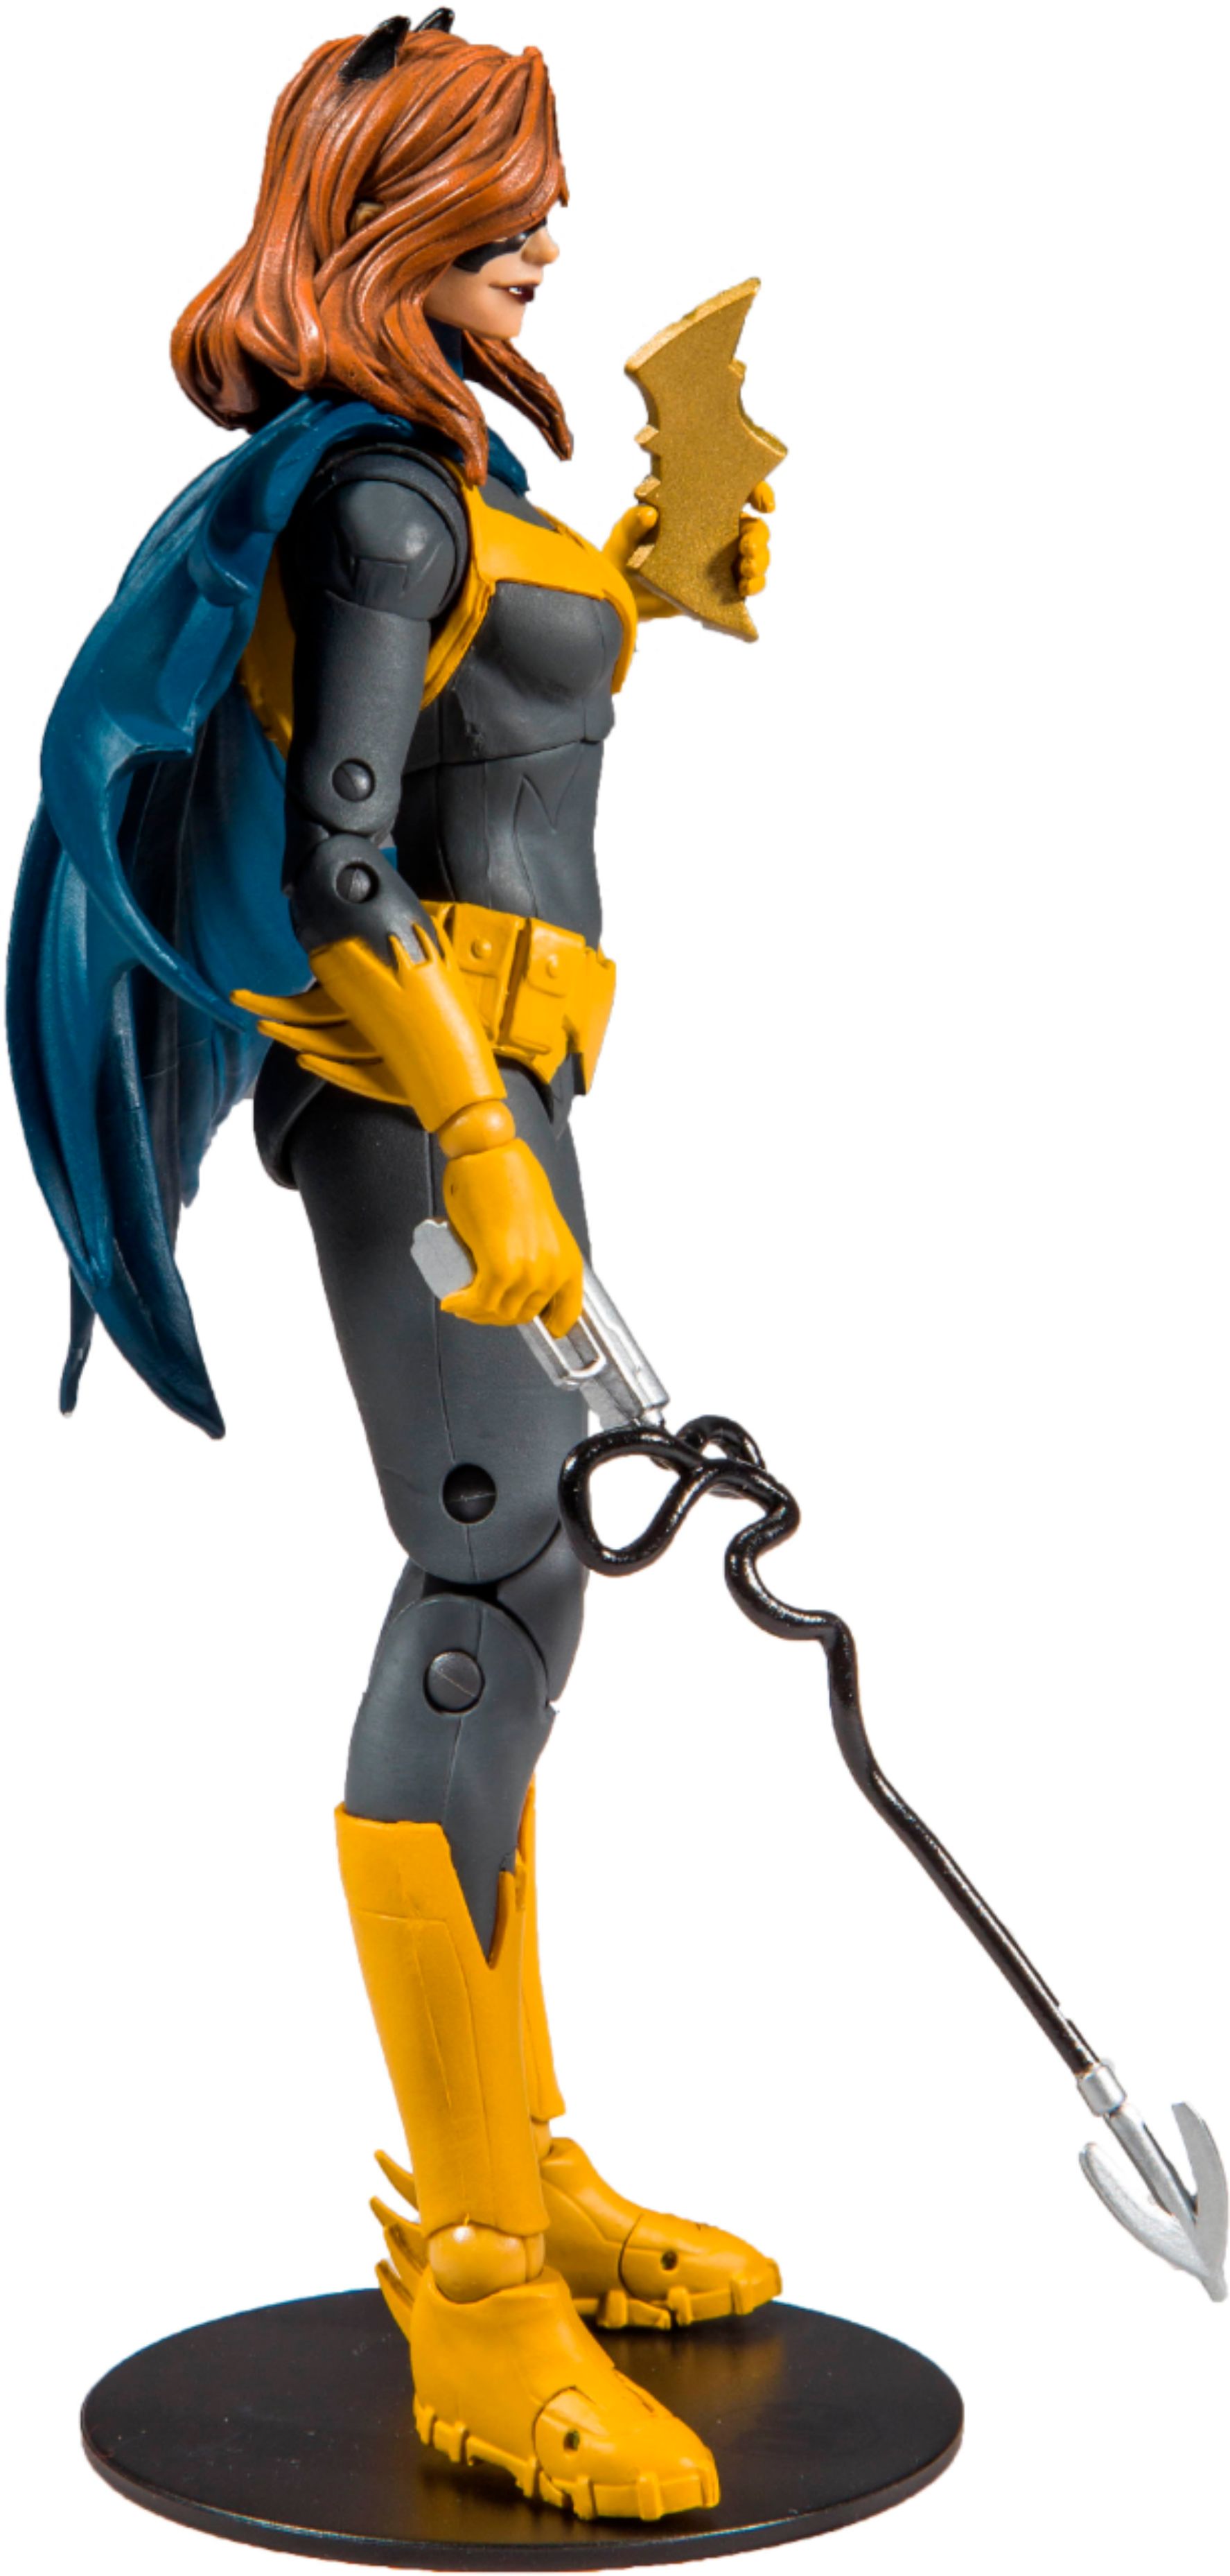 Angle View: McFarlane Toys - DC Multiverse - Modern Bat Girl 7" Action Figure - Multi